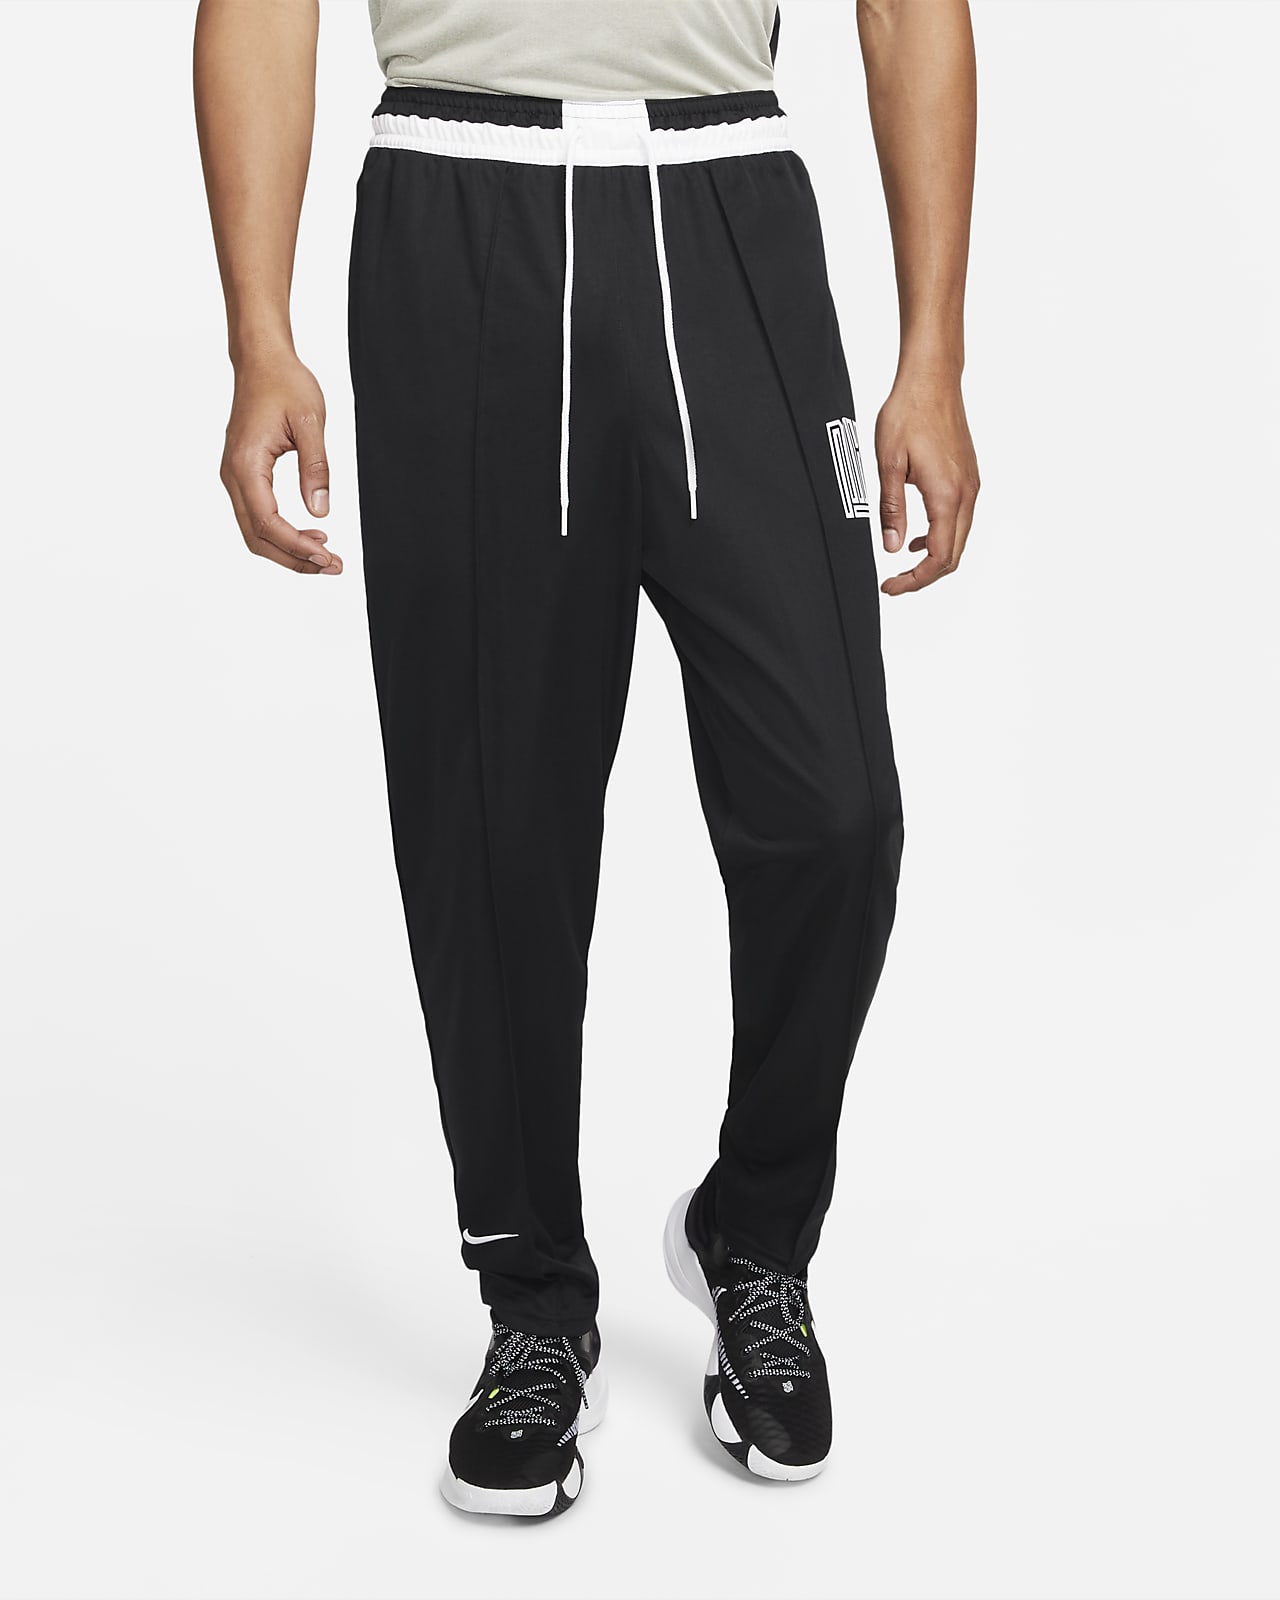 Nike Dri-FIT Men's Basketball Trousers